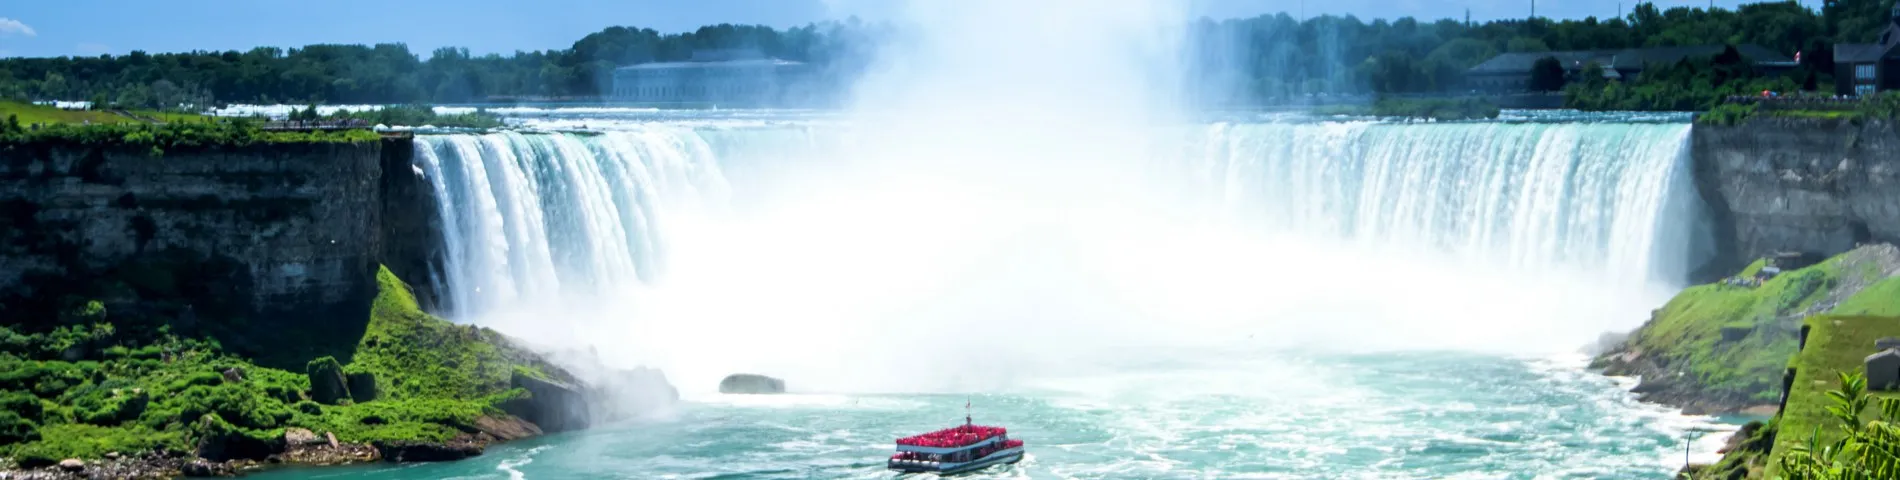 Welland (Niagarafallen) - 